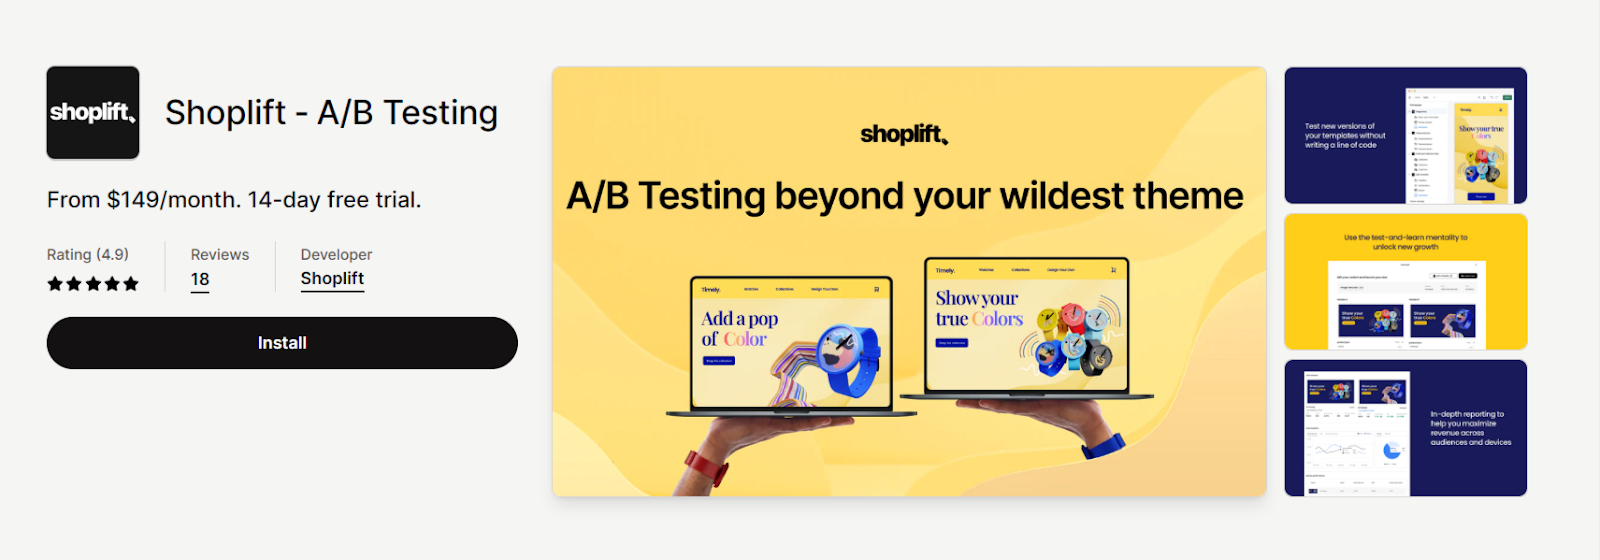 Shoplift - A/B Testing